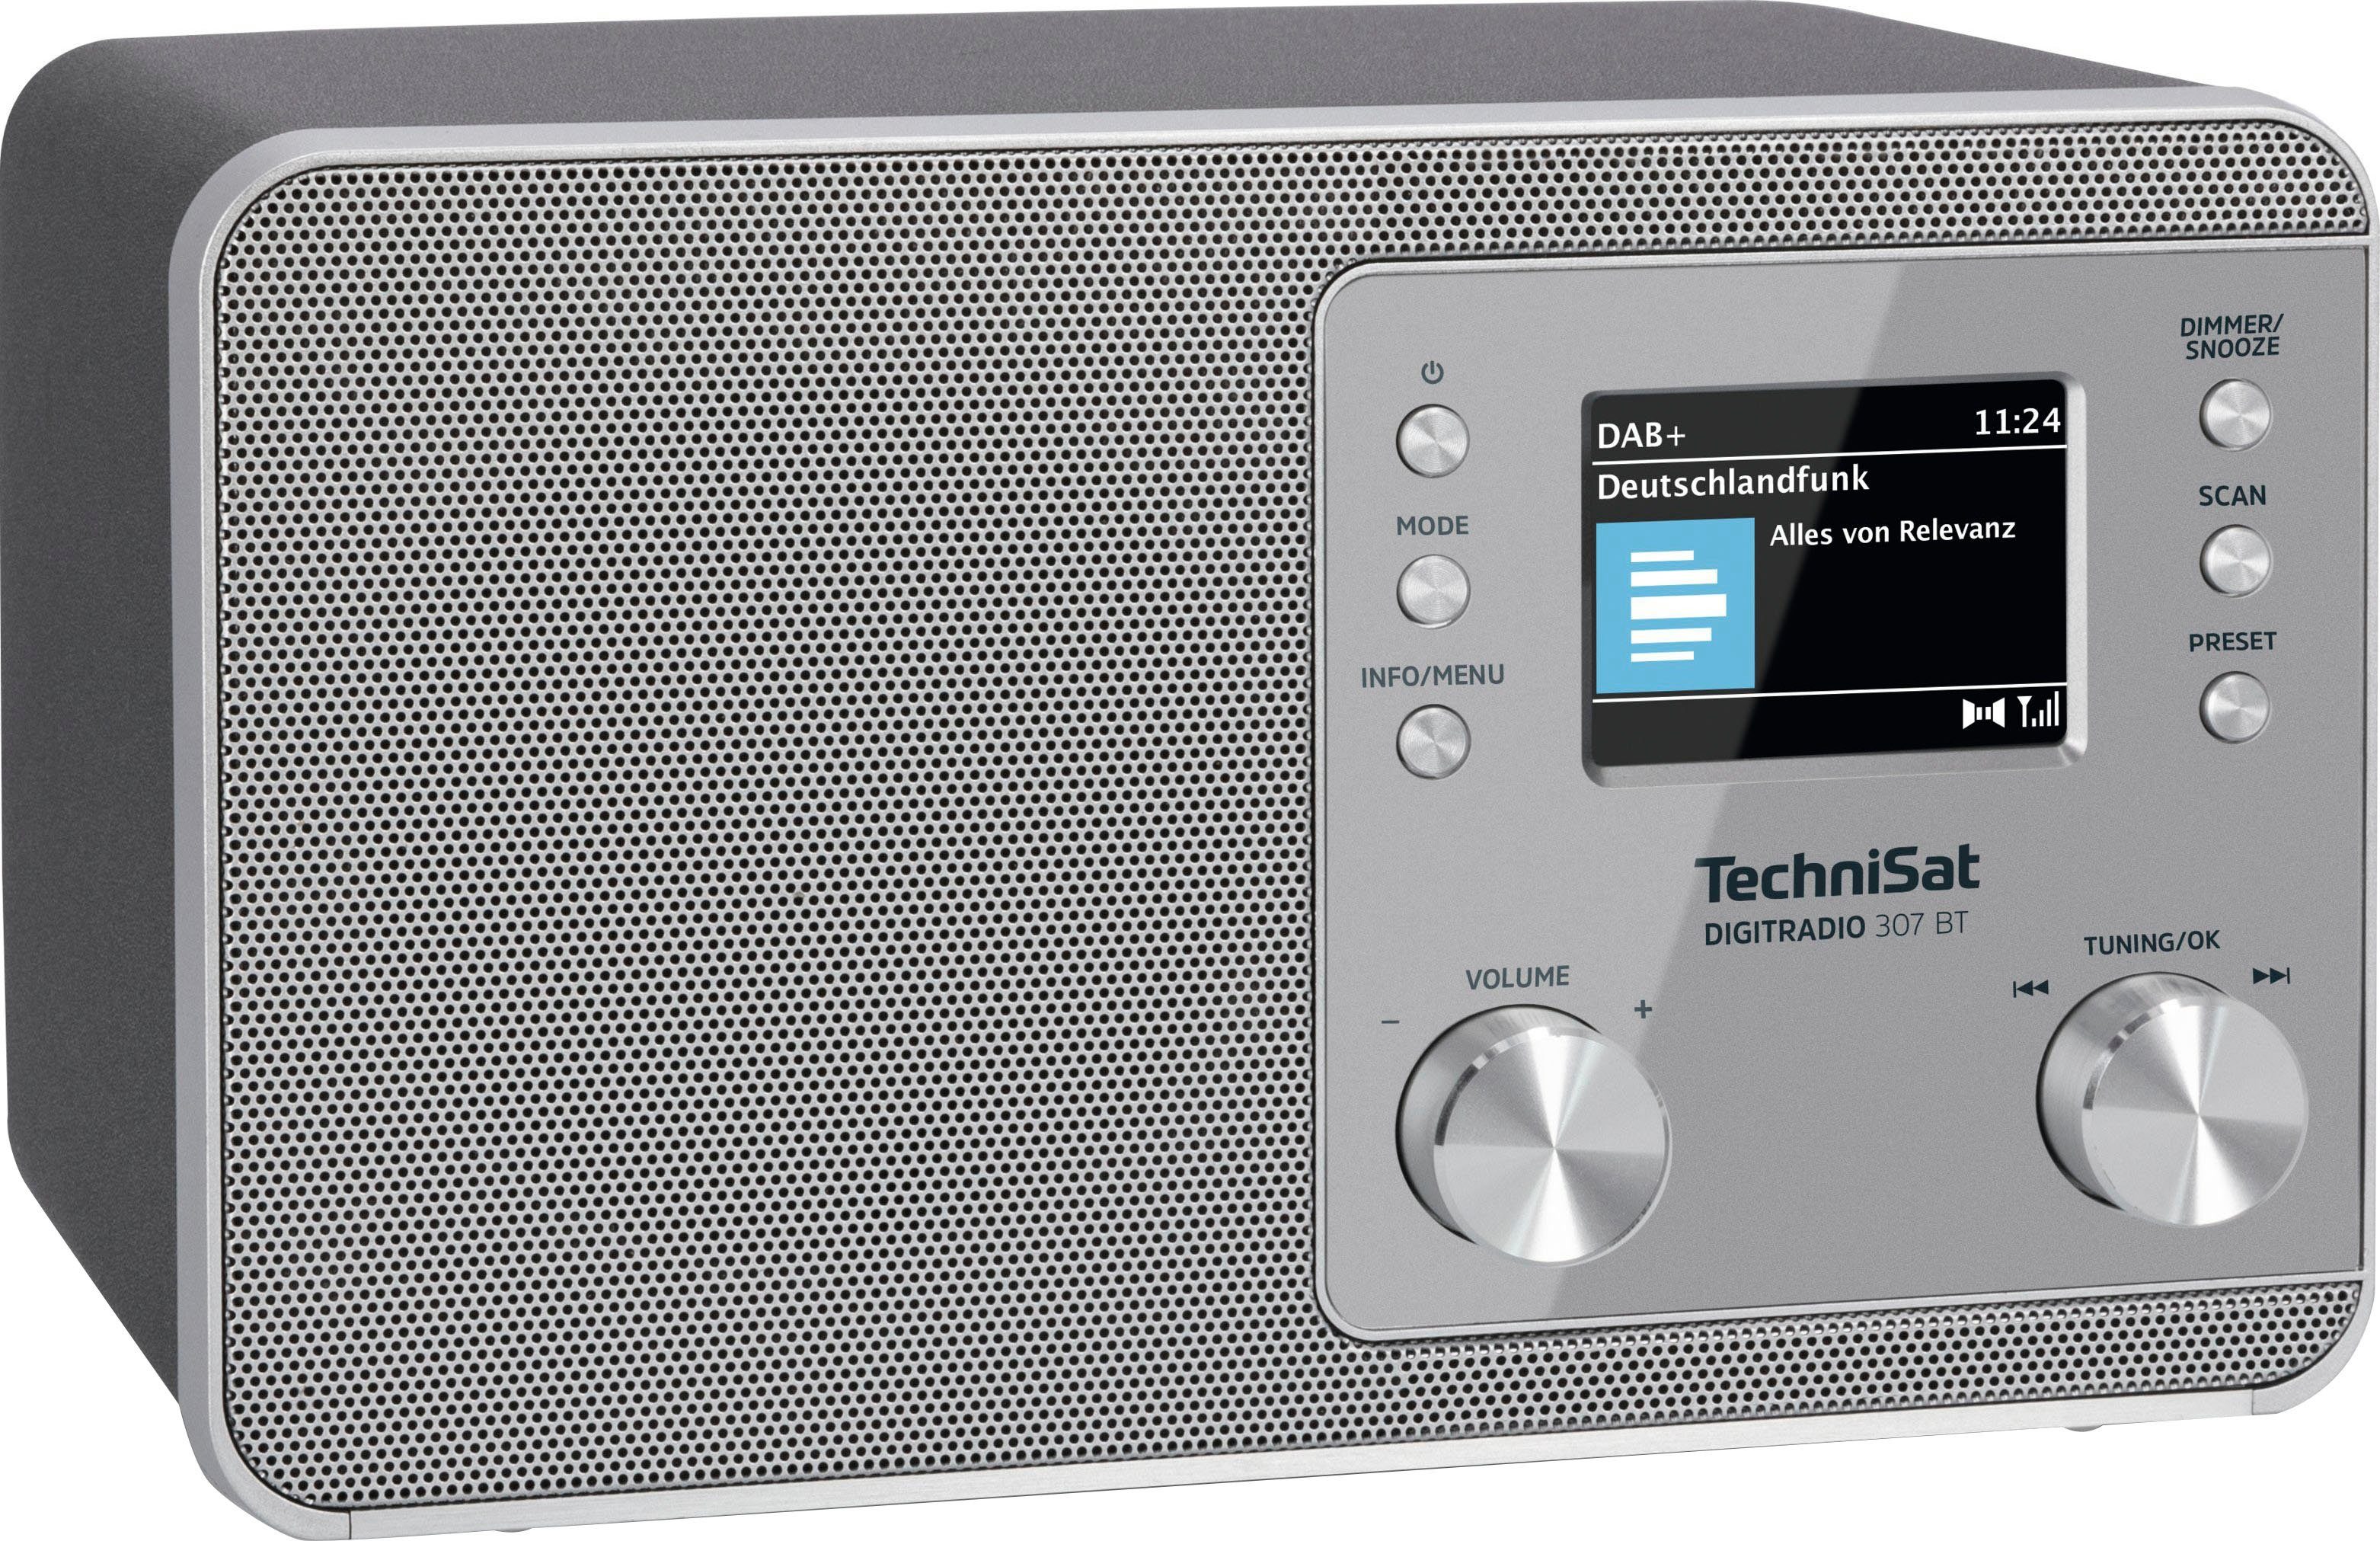 TechniSat DIGITRADIO 307 BT 5 Sleep-Timer, (DAB), Bluetooth, (Digitalradio W), Radio mit Weckfunktion RDS, UKW